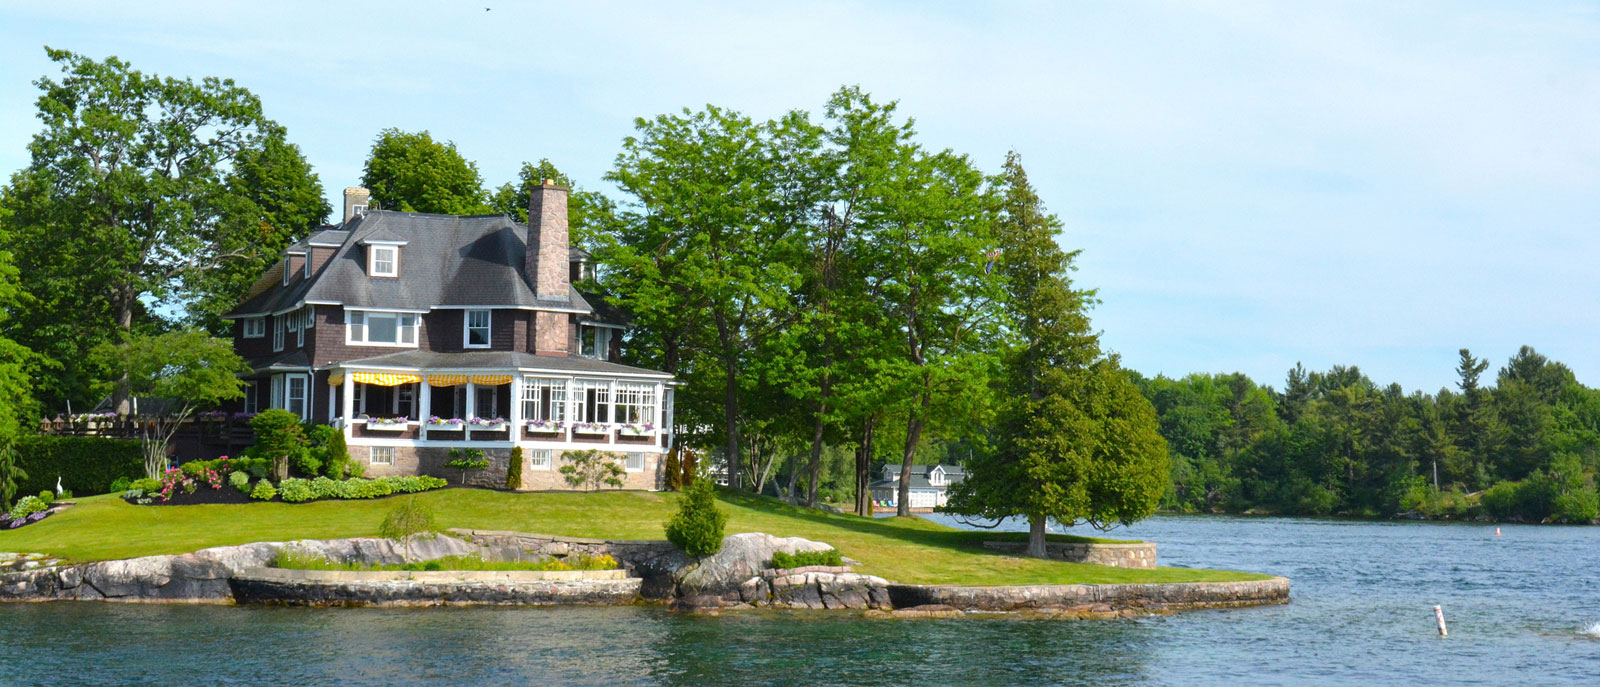 Merrymeeting Lake Real Estate - Merrymeeting Lakefront Homes for sale